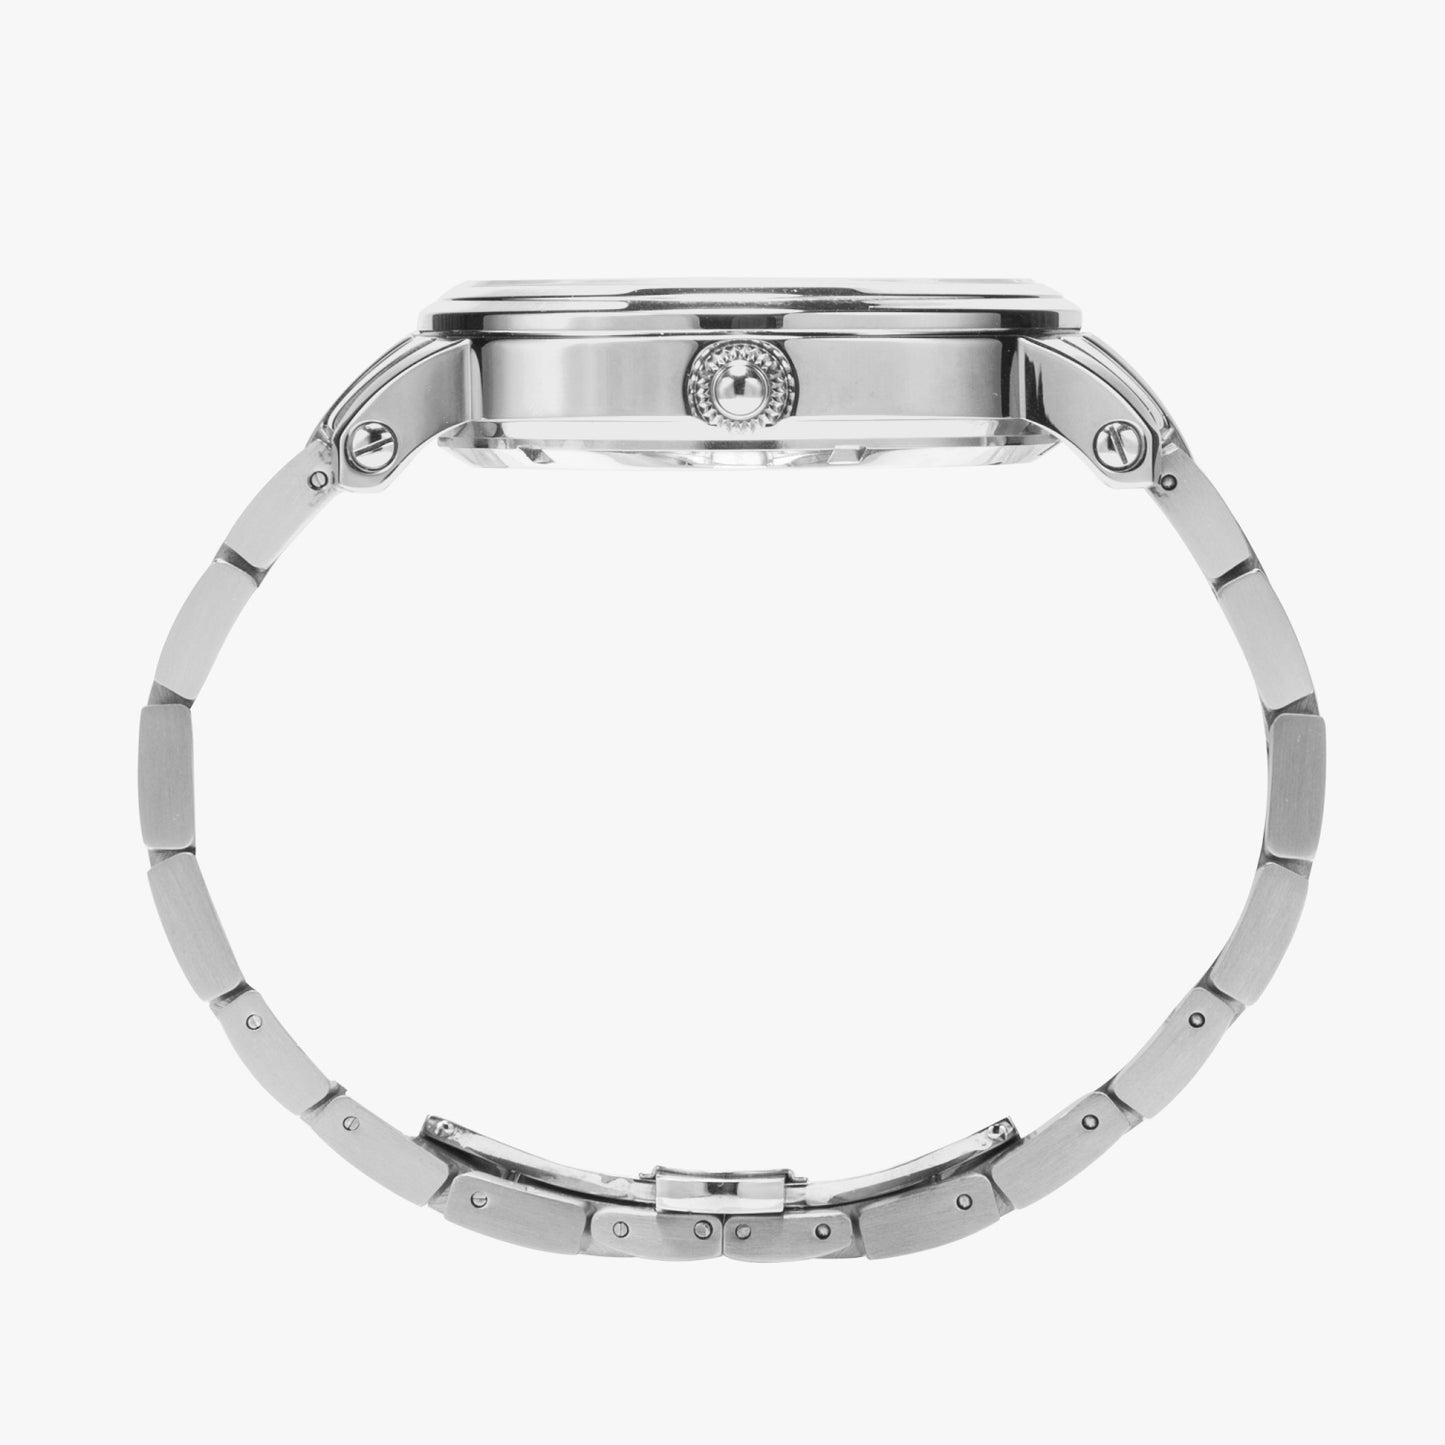 Italia Automatic Movement Watch - Premium Stainless Steel